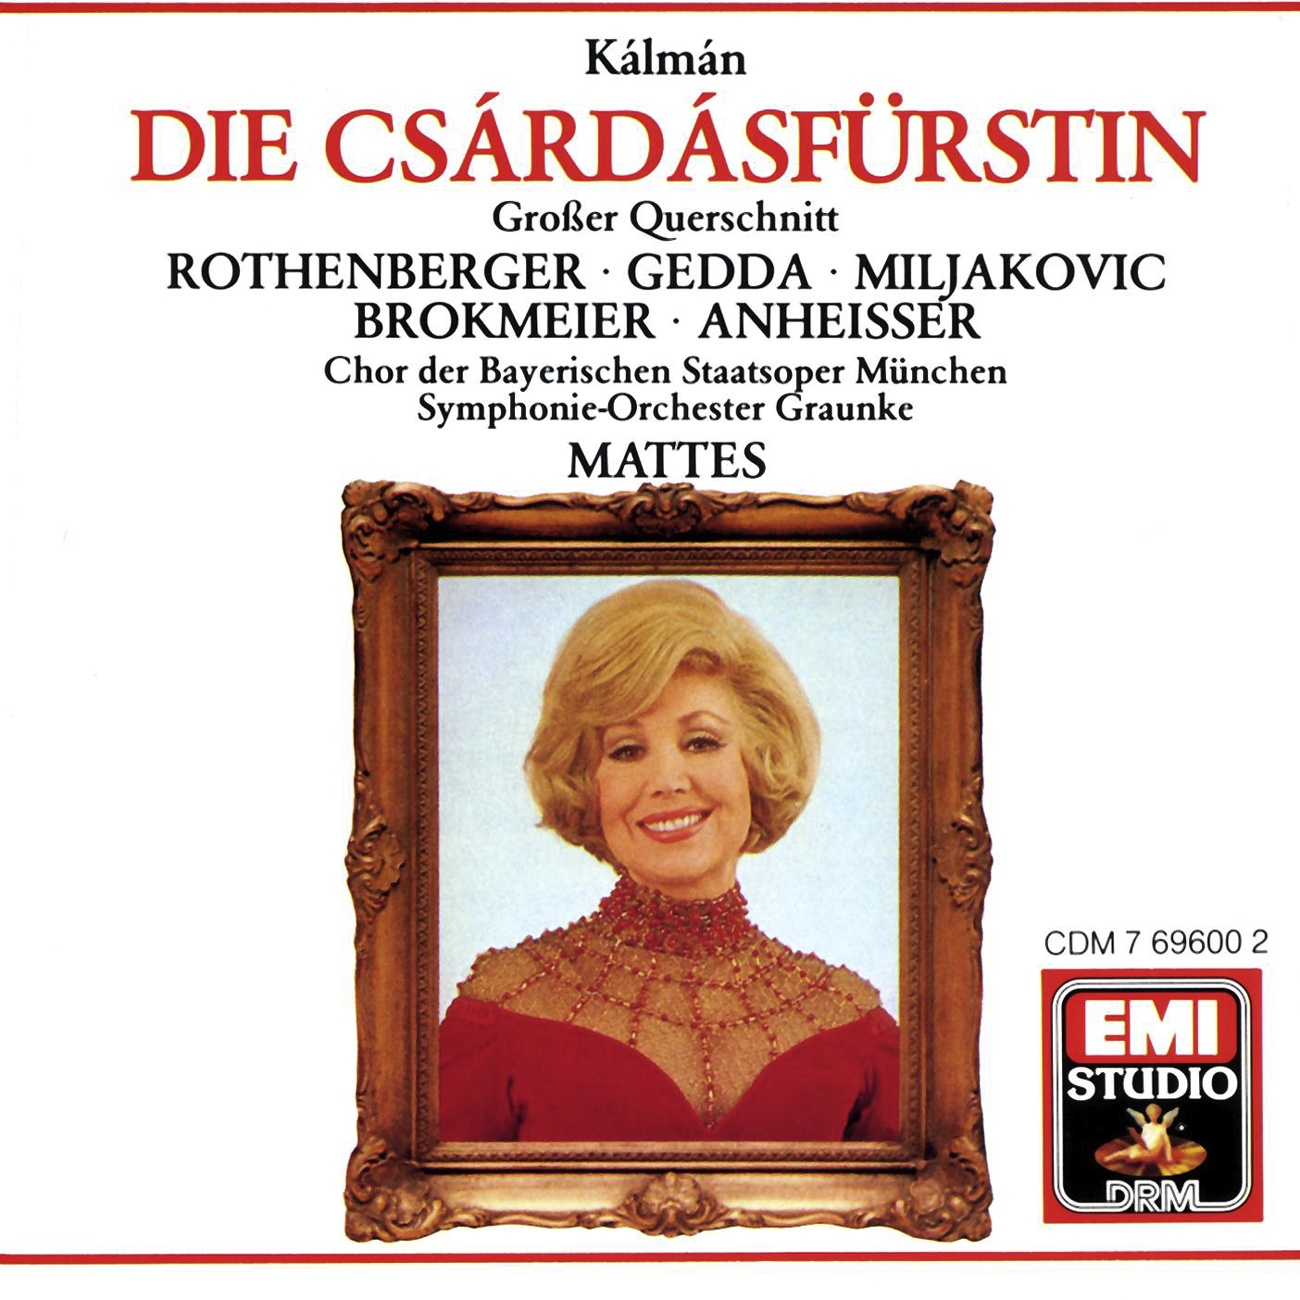 Die Csa rda sfü rstin  Operette in 3 Akten Highlights 1988 Digital Remaster: Nimm, Zigeuner, deine Geige  Jaj Mama m, Bruderhe